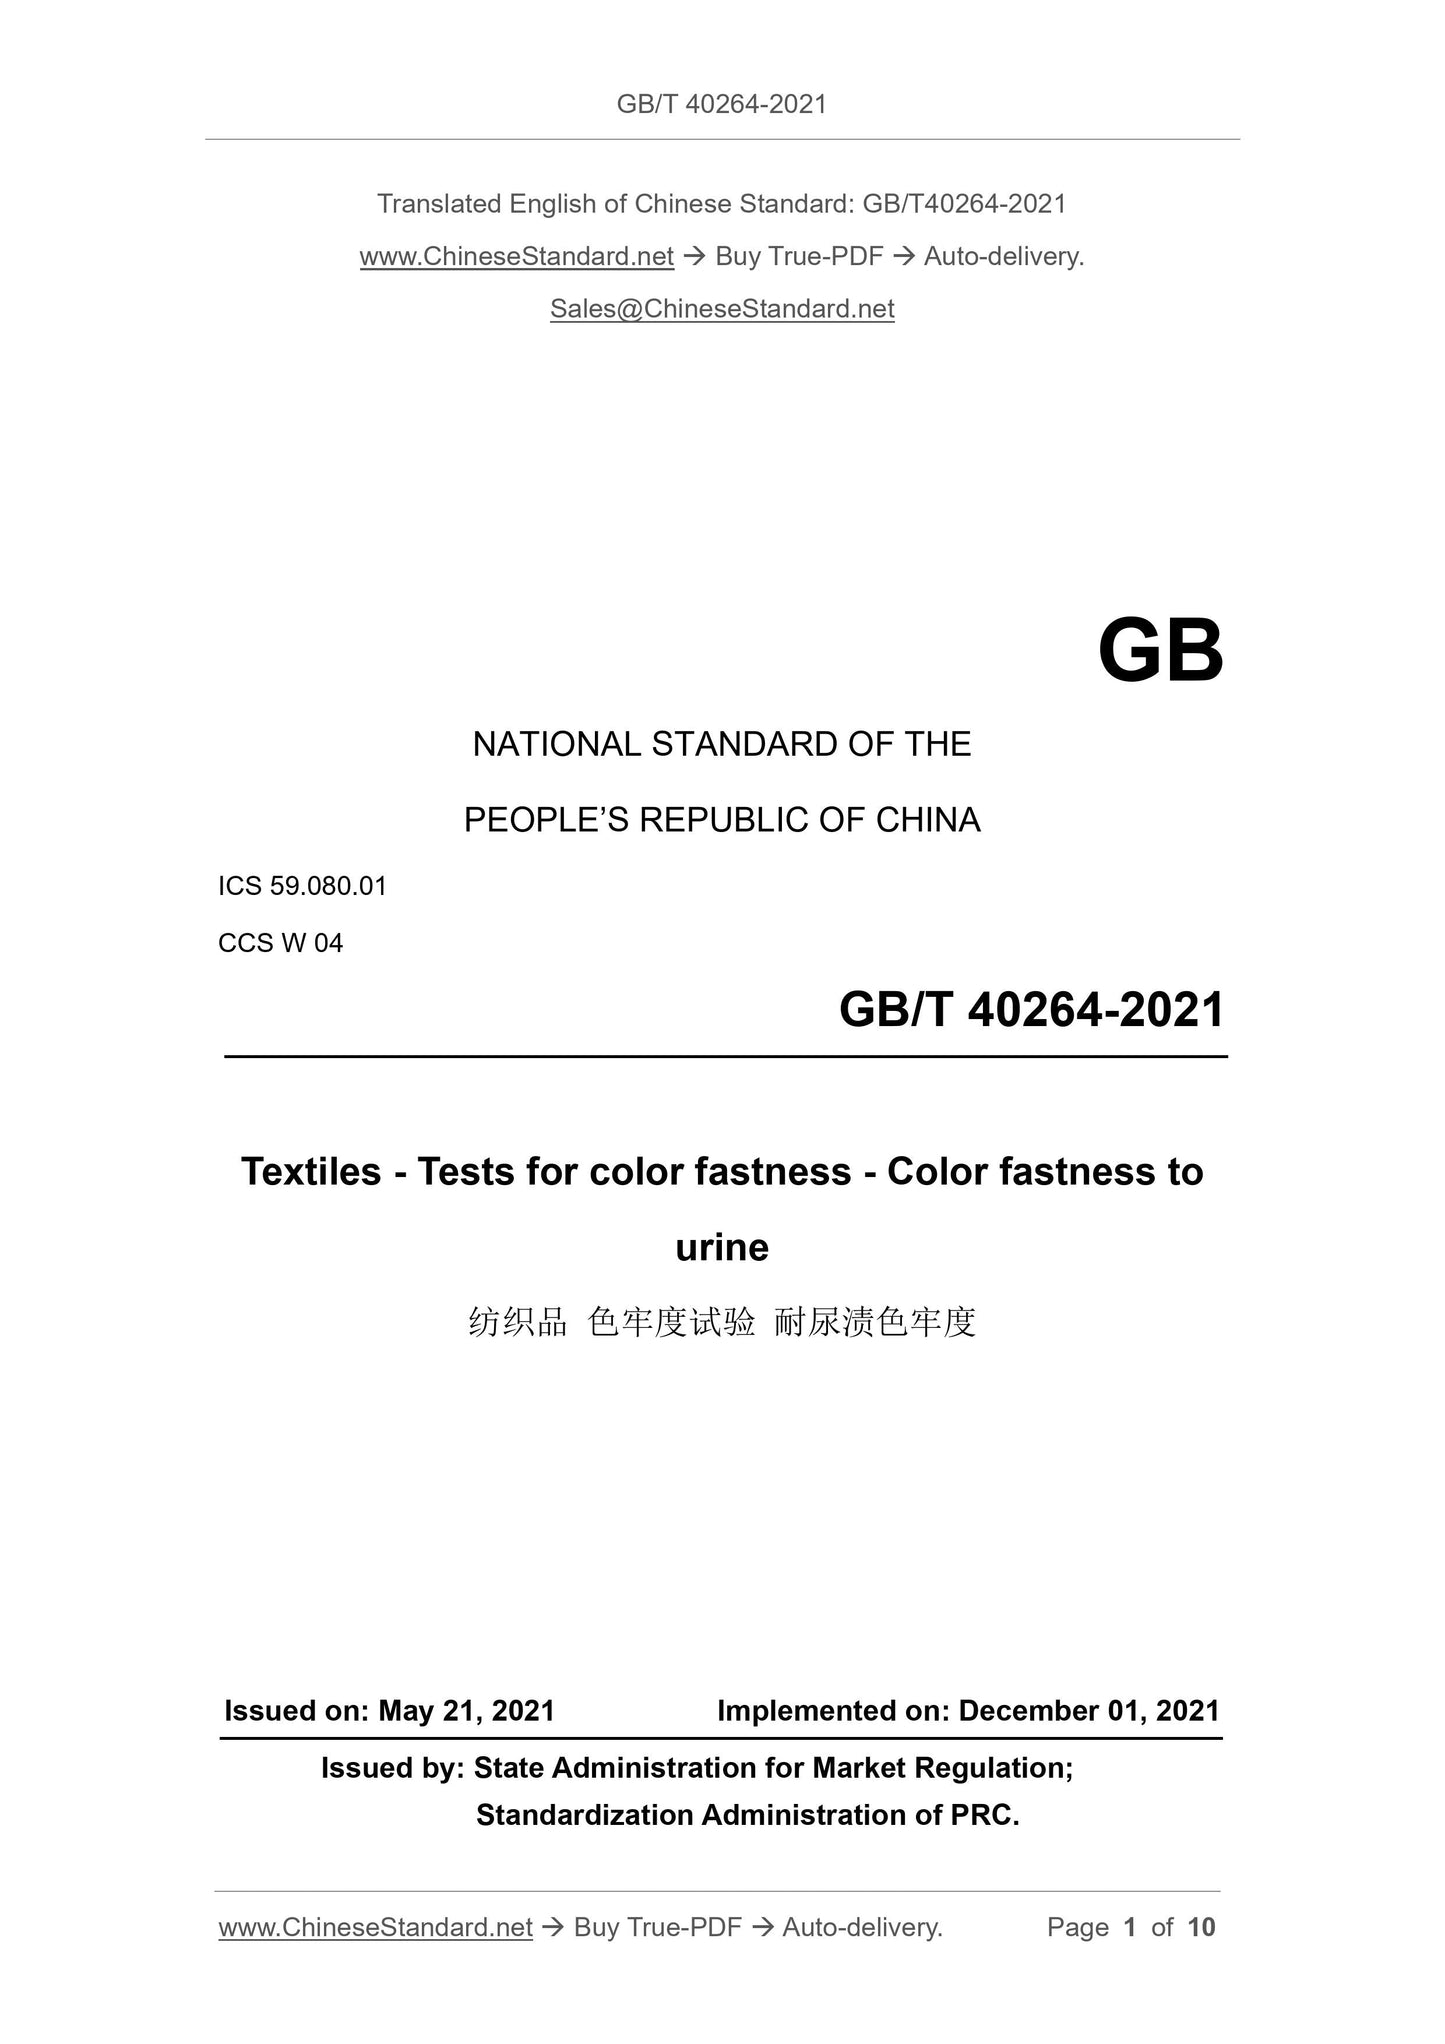 GBT40264-2021 Page 1